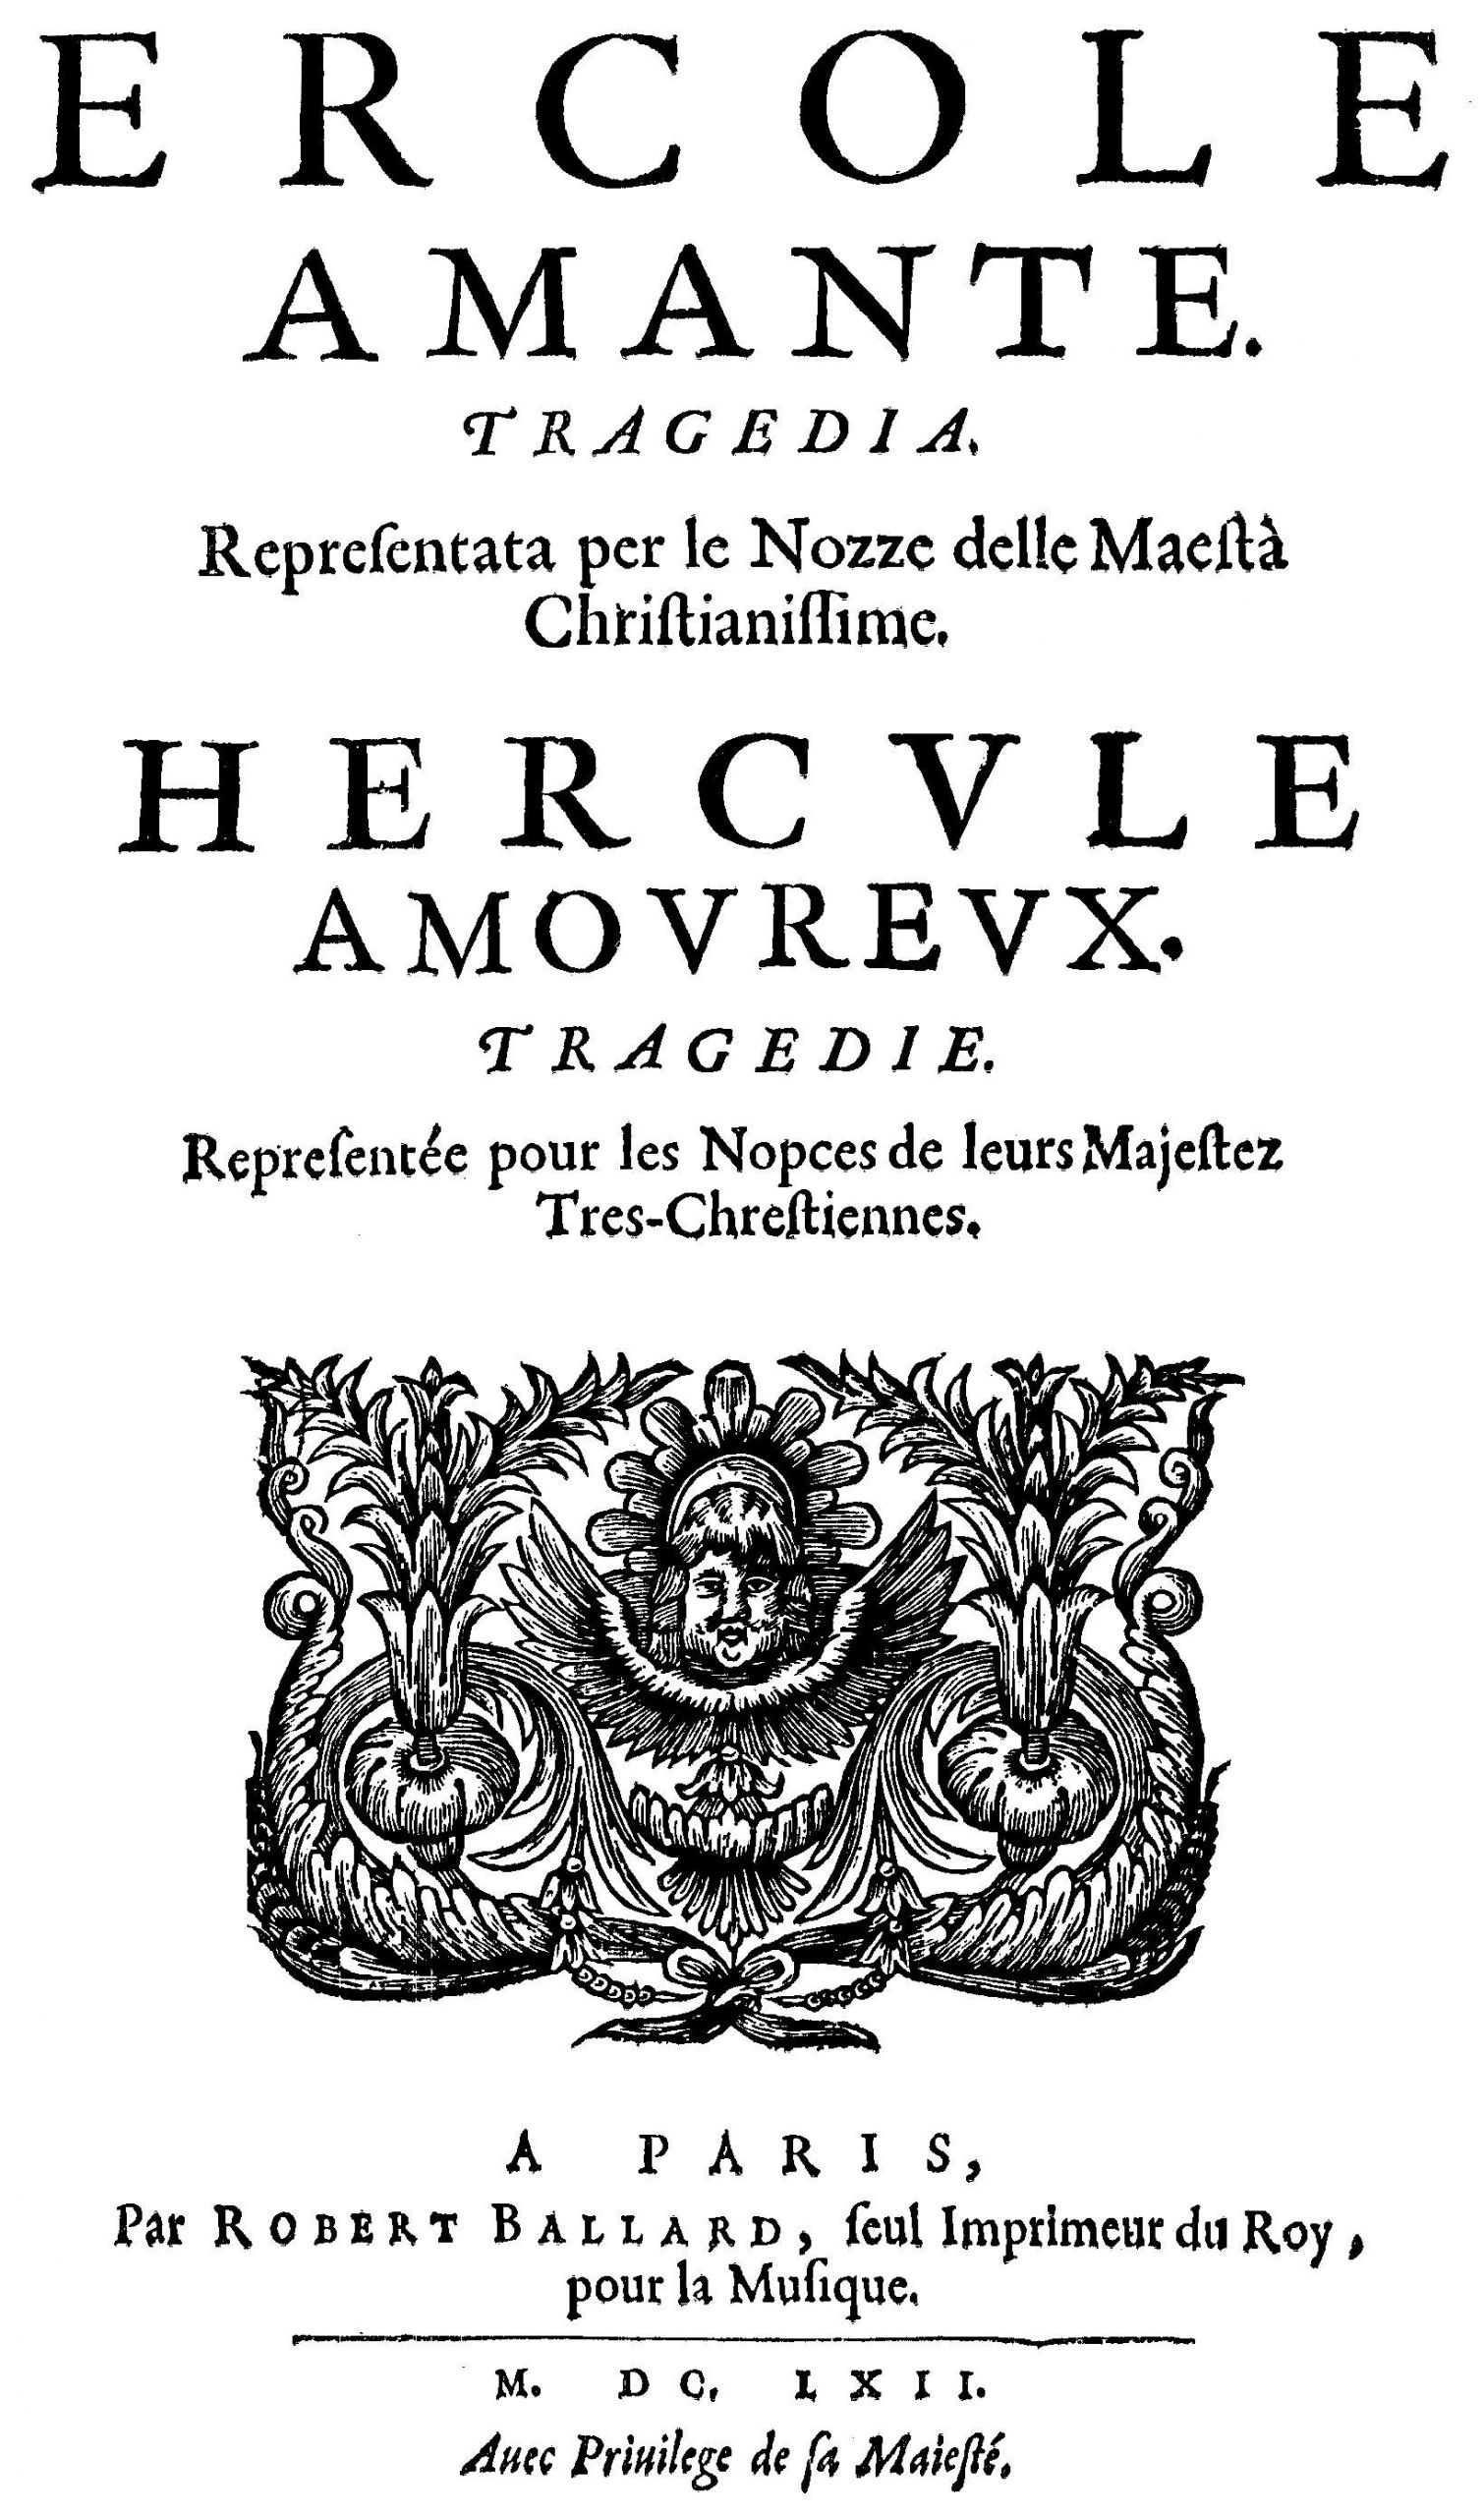 Francesco Cavalli Ercole amante title page of the libretto Paris 1662